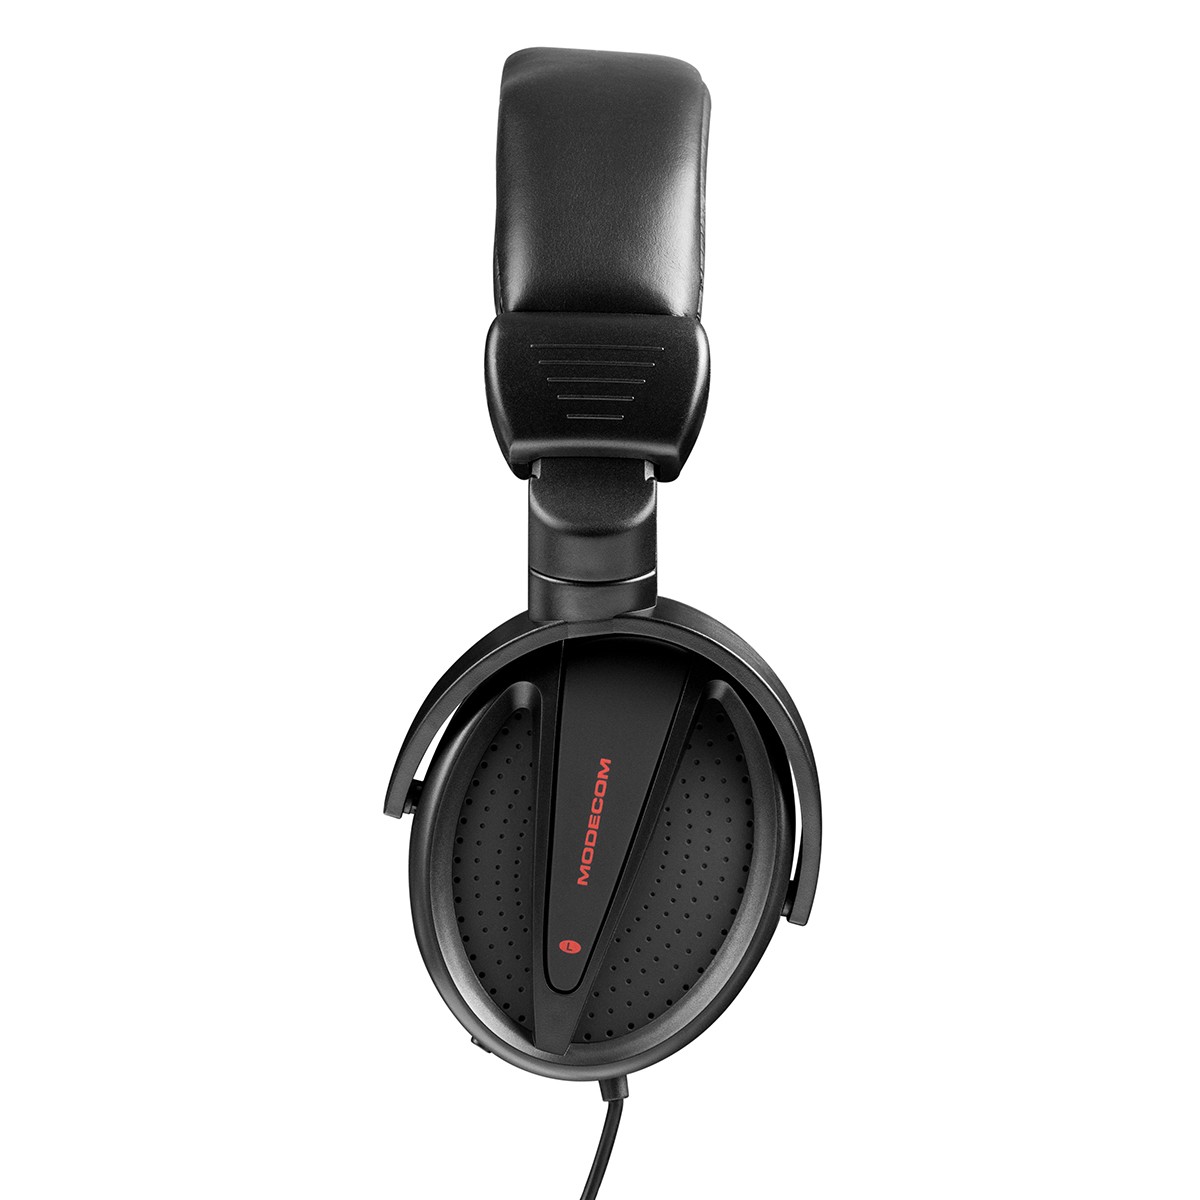 MODECOM MC-828 STRIKER gamers headphones